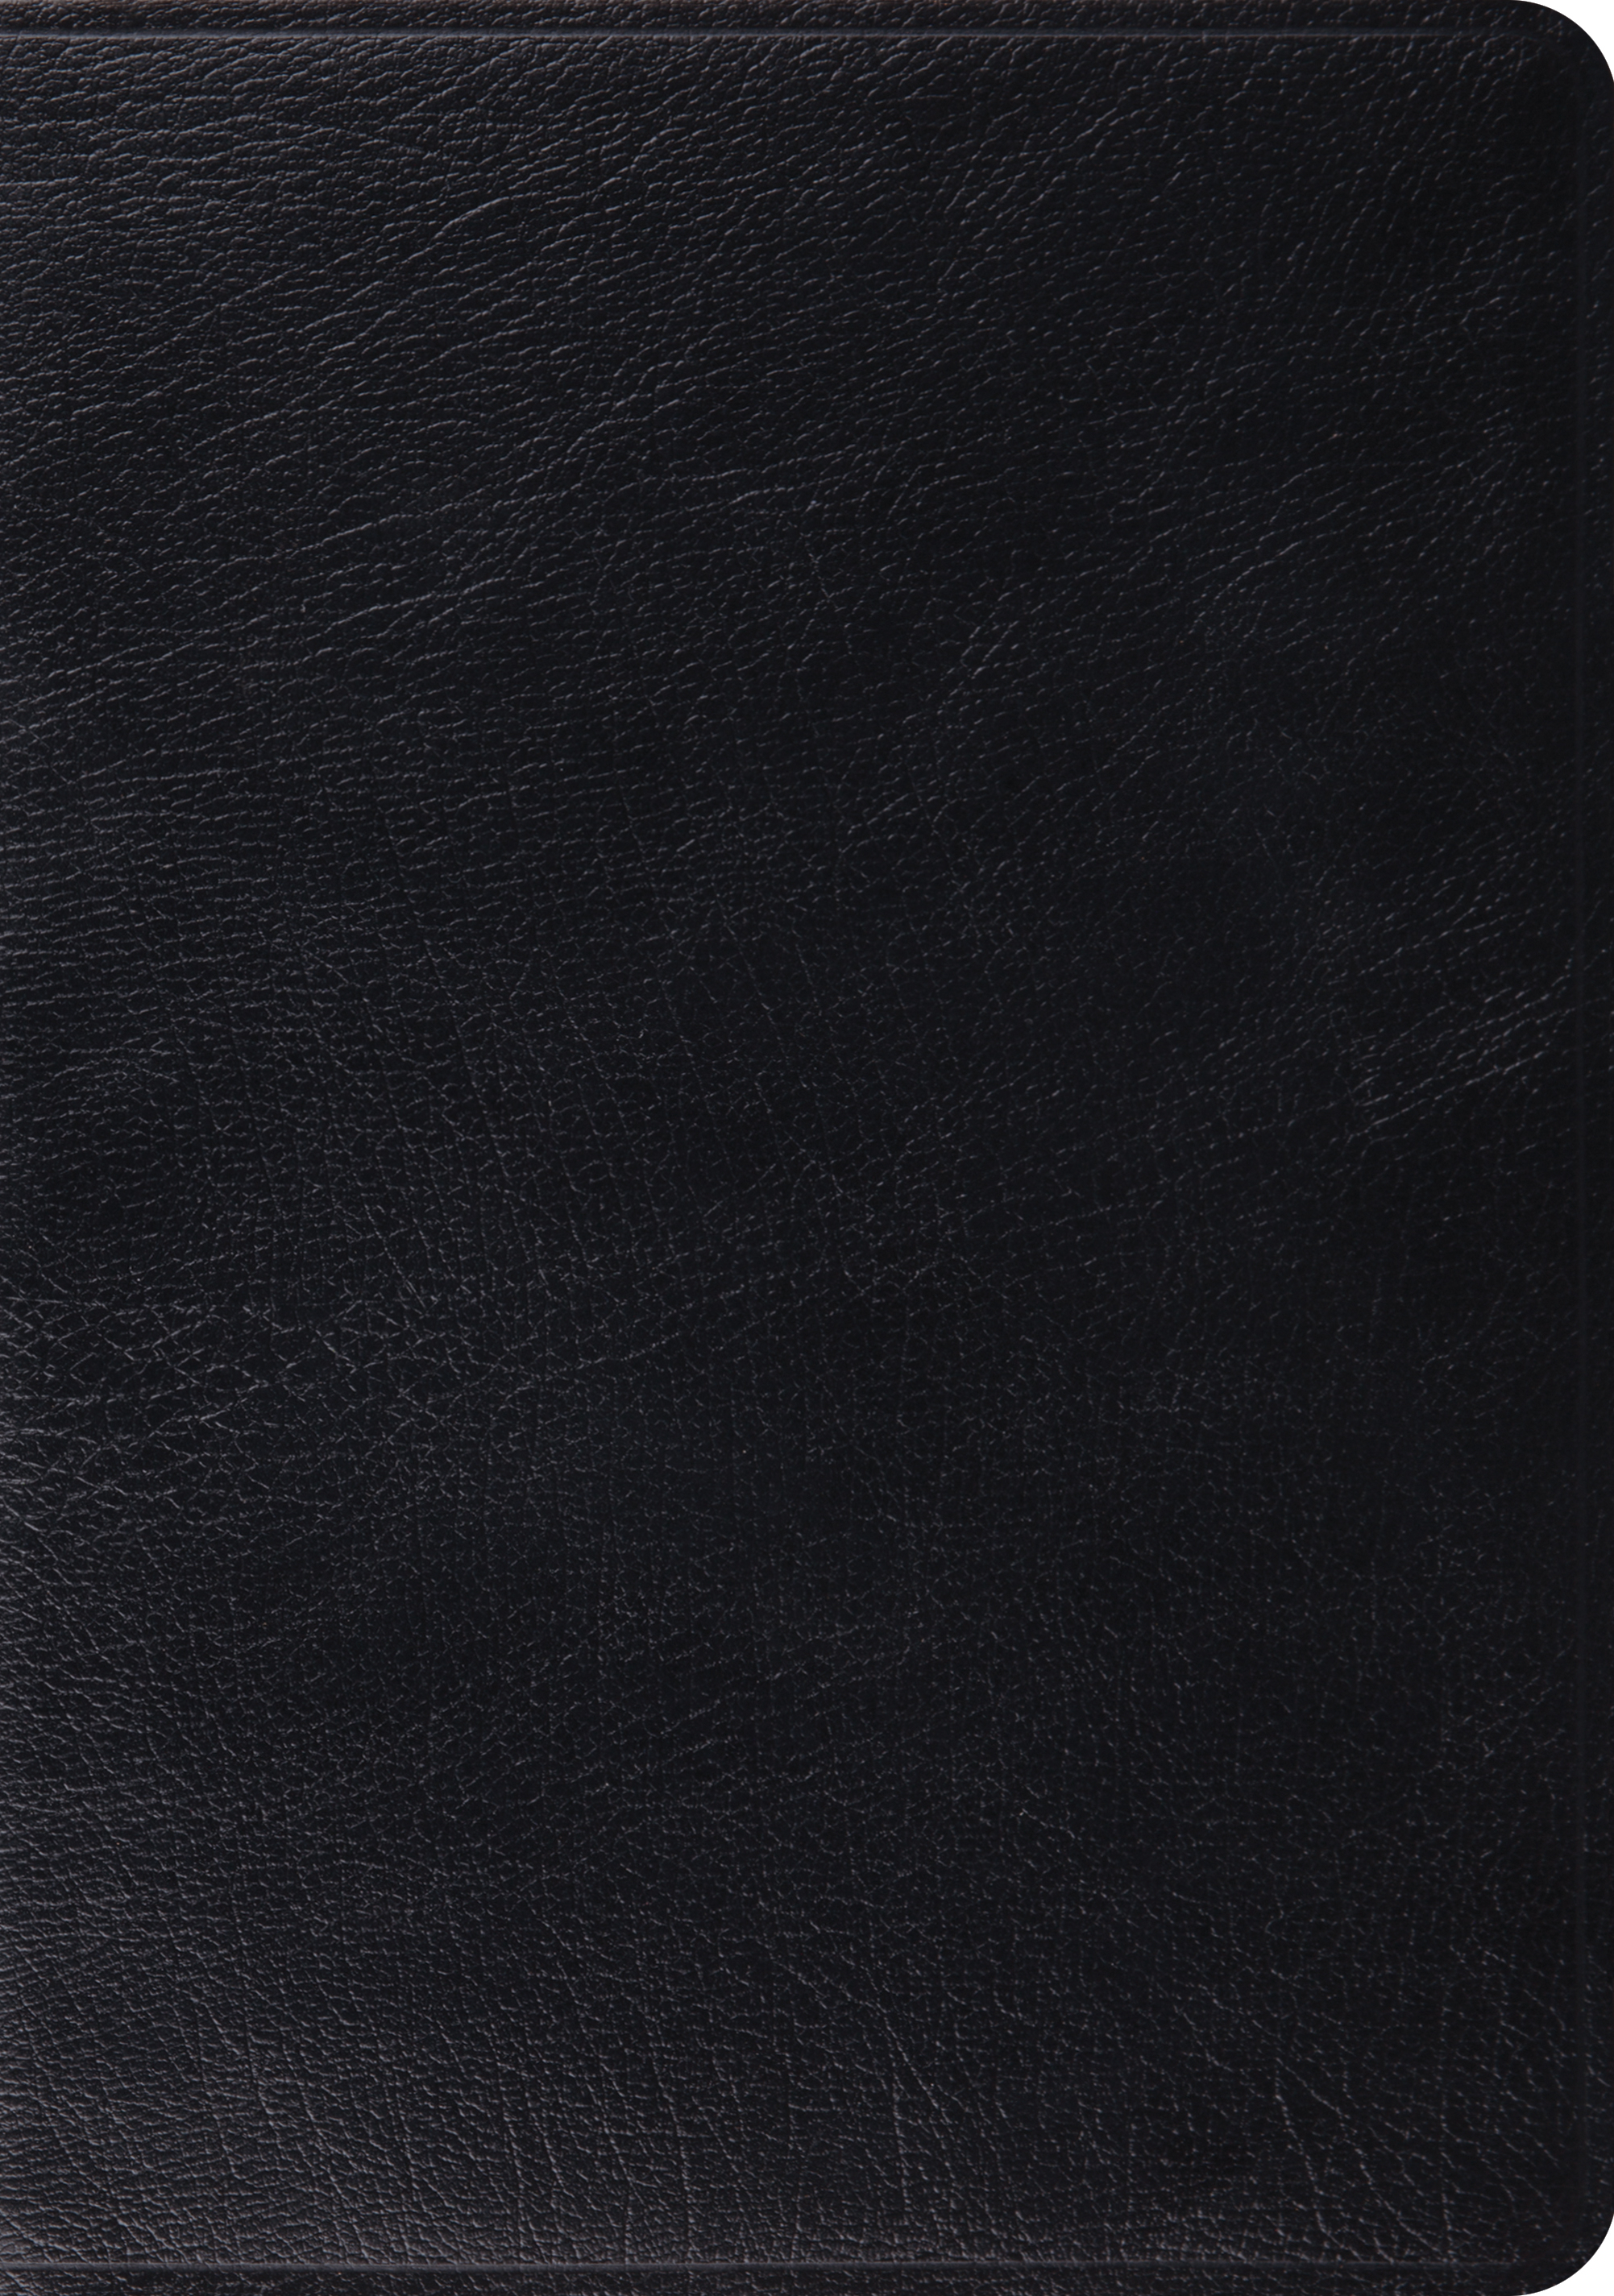 ESV Study Bible Black Genuine Leather 20 000 Study Notes Cross-Ref